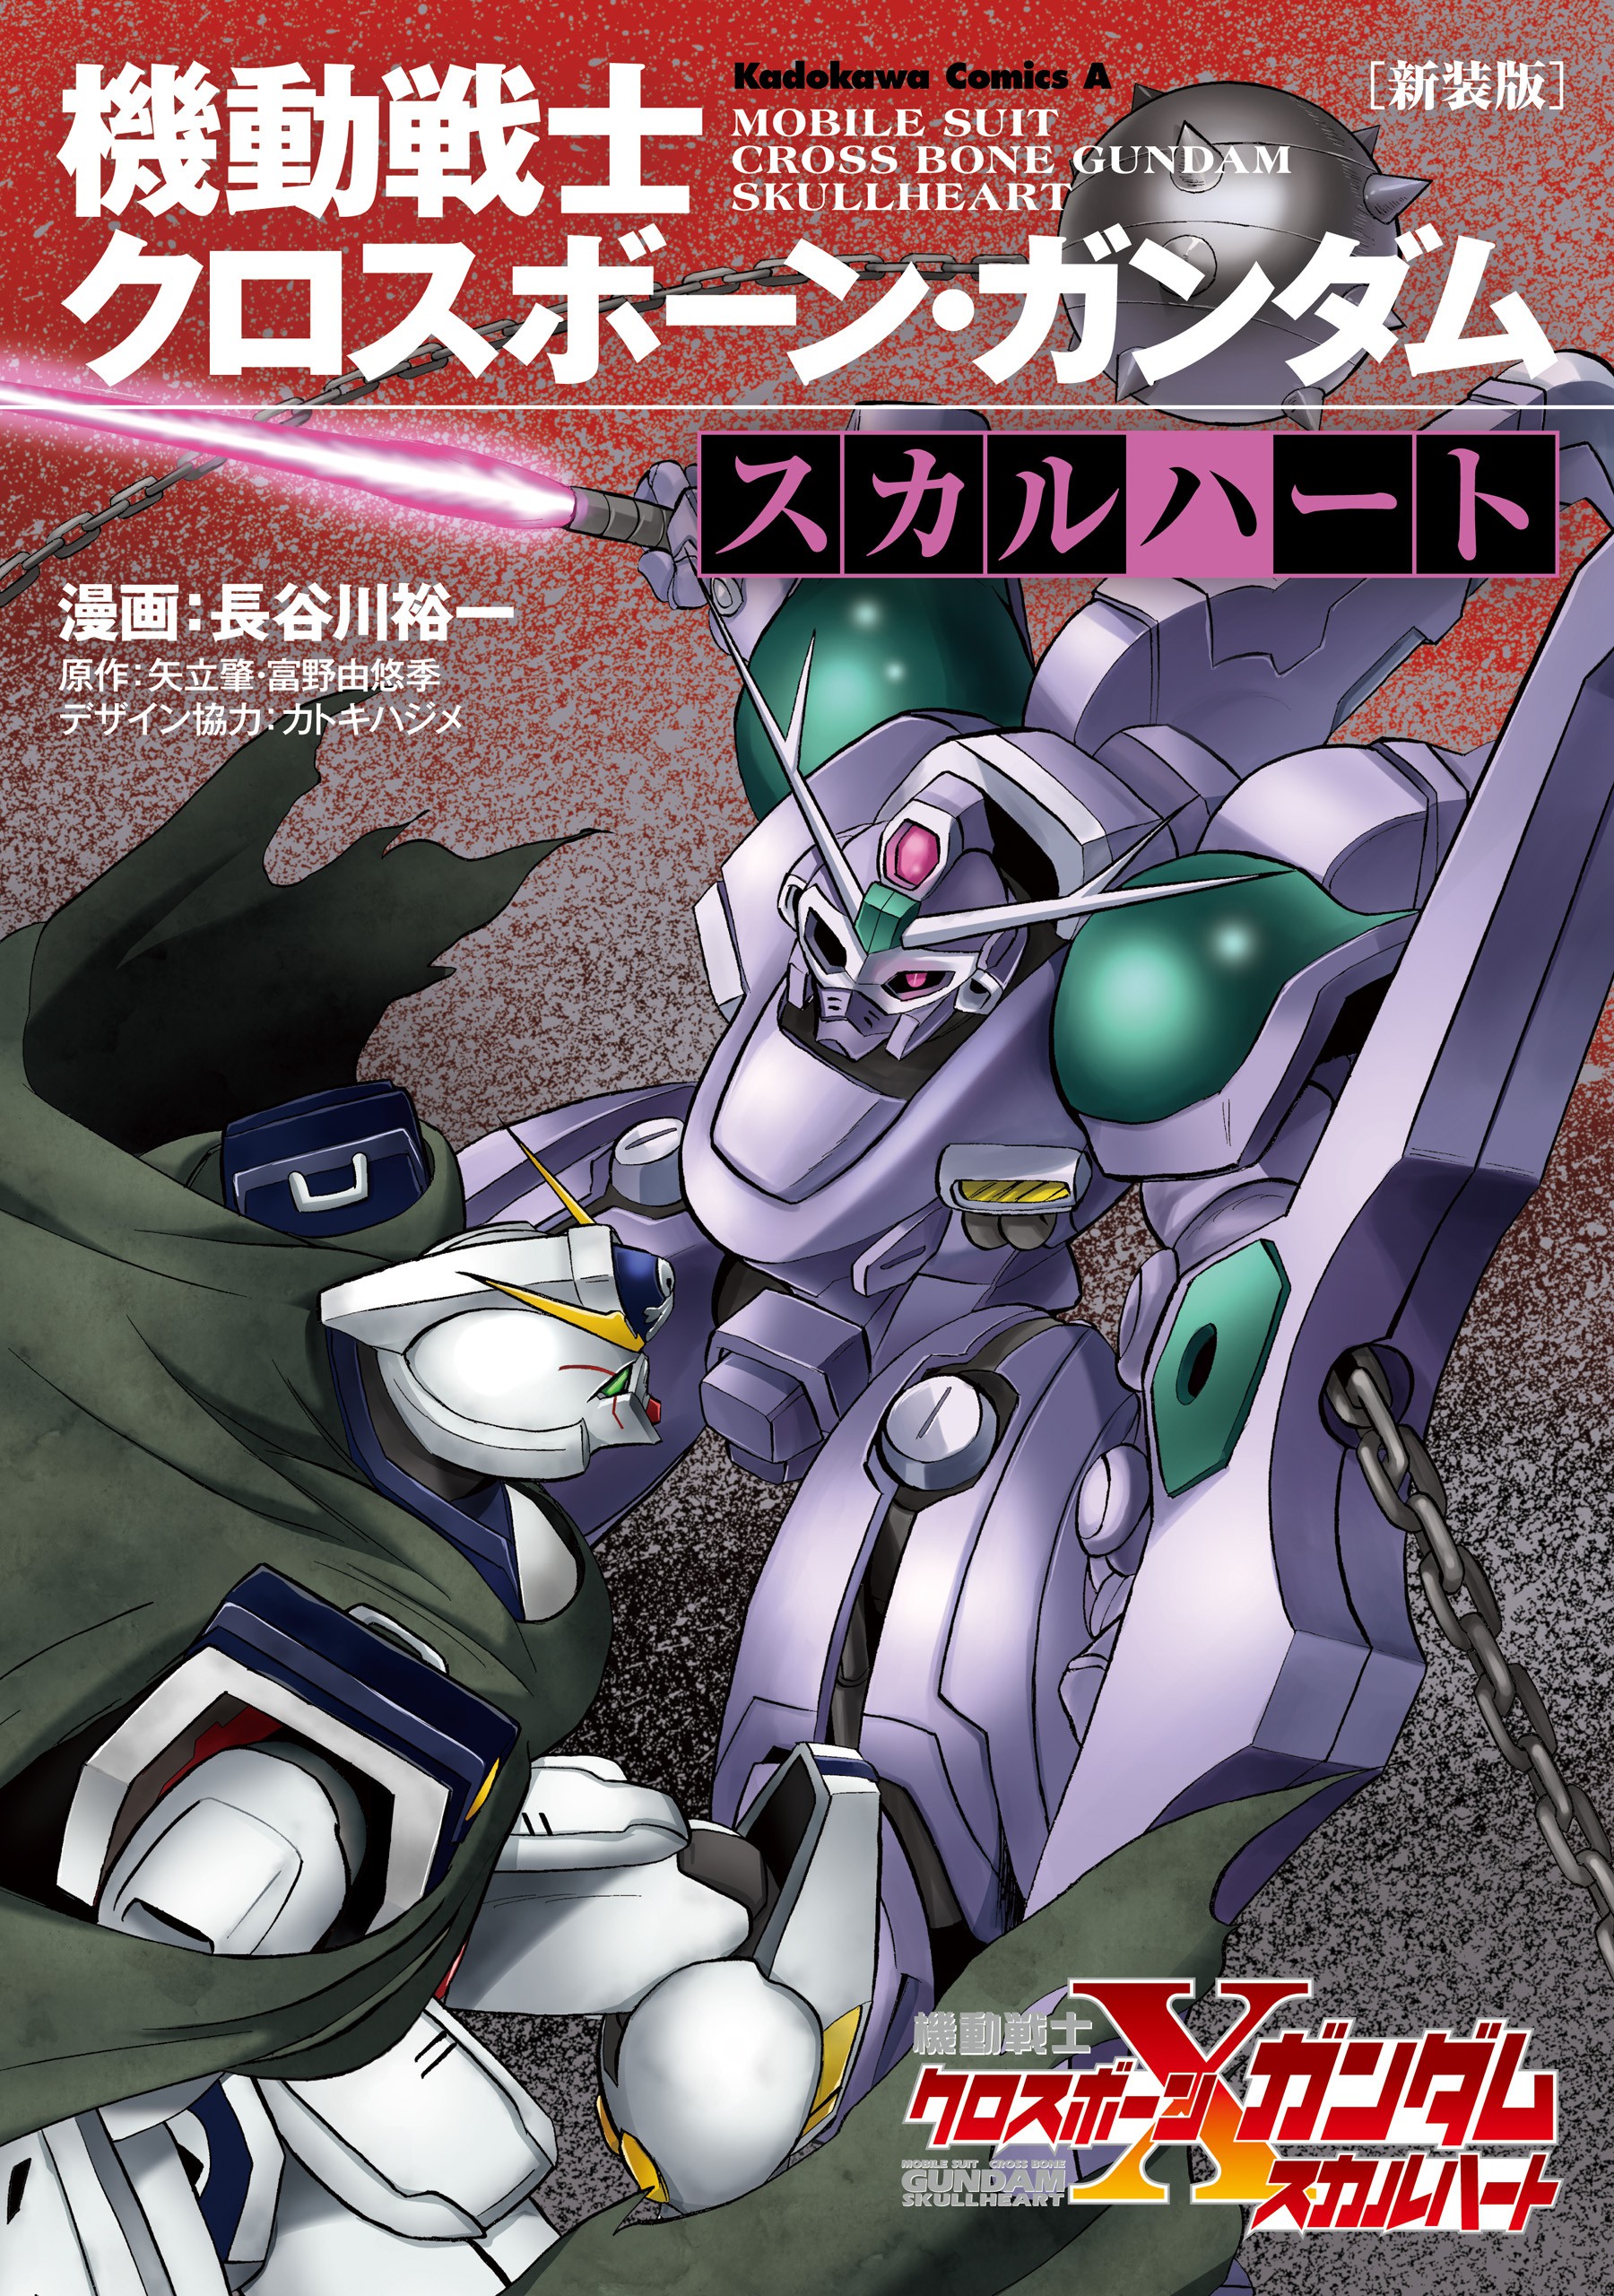 Mobile Suit Crossbone Gundam - Skullheart - MangaDex